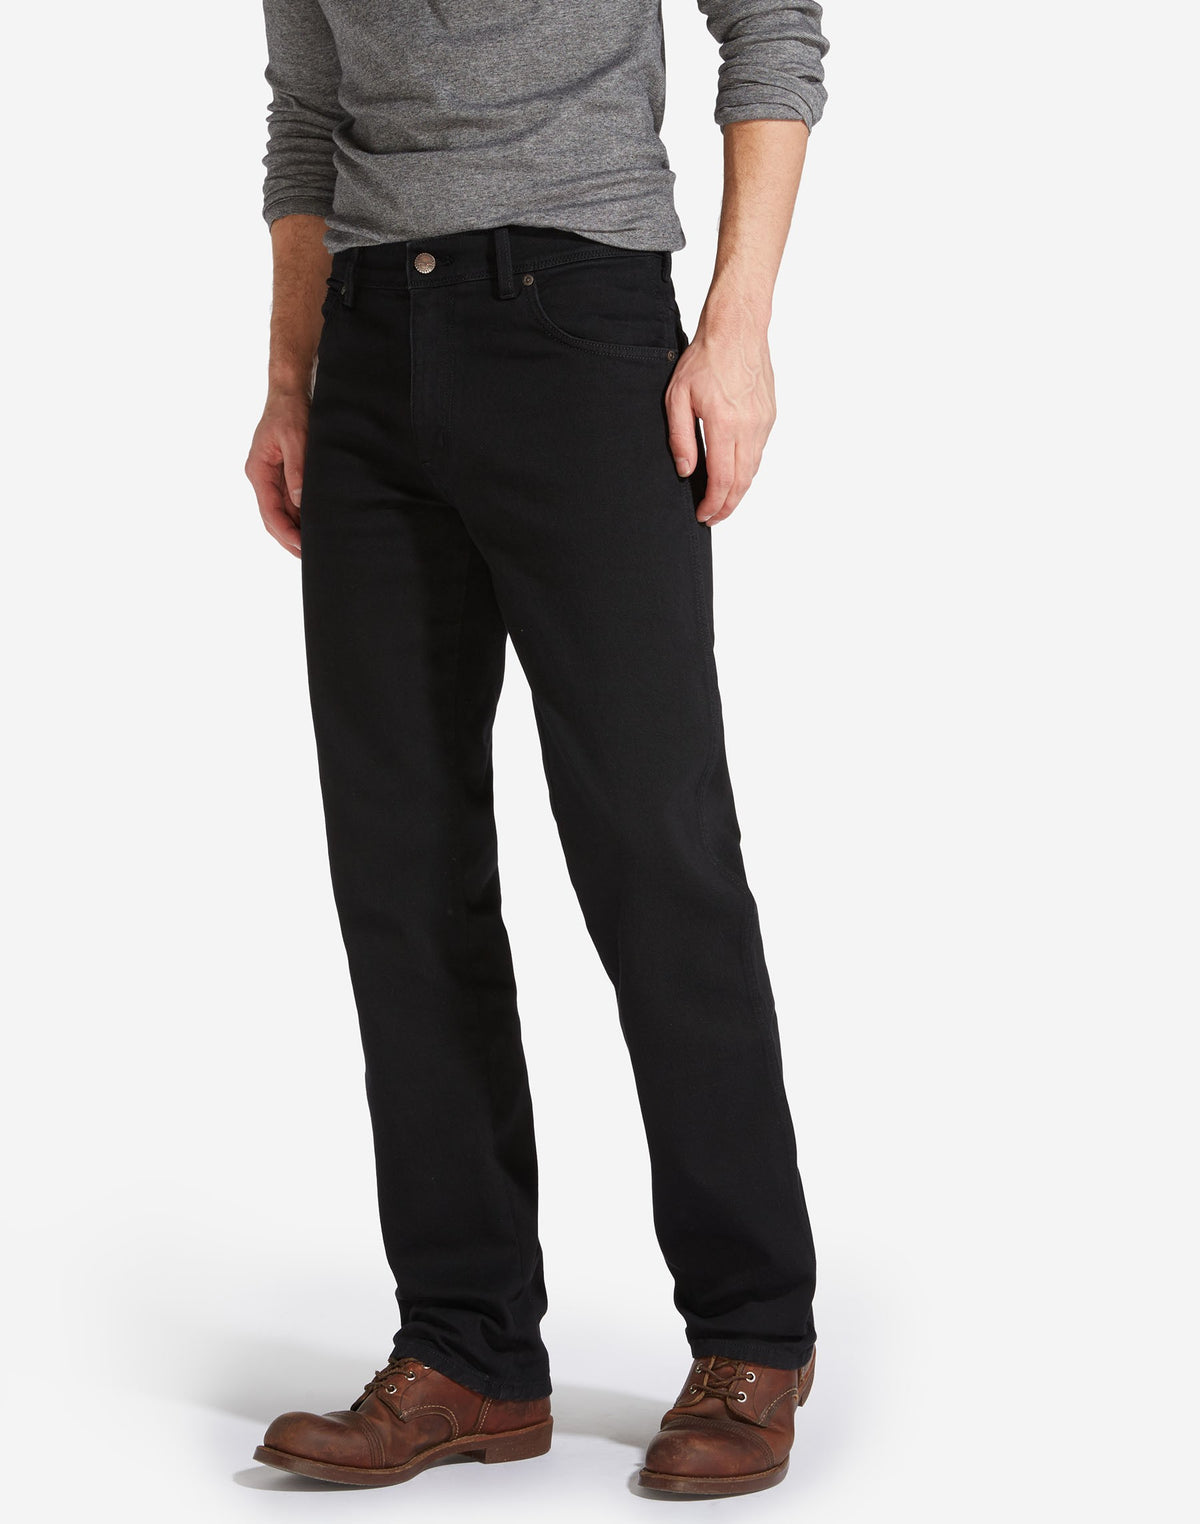 Mens Wrangler 'Texas' Jeans - Denim Stretch - Original Straight Fit, 01, W121-Core, Black Overdye